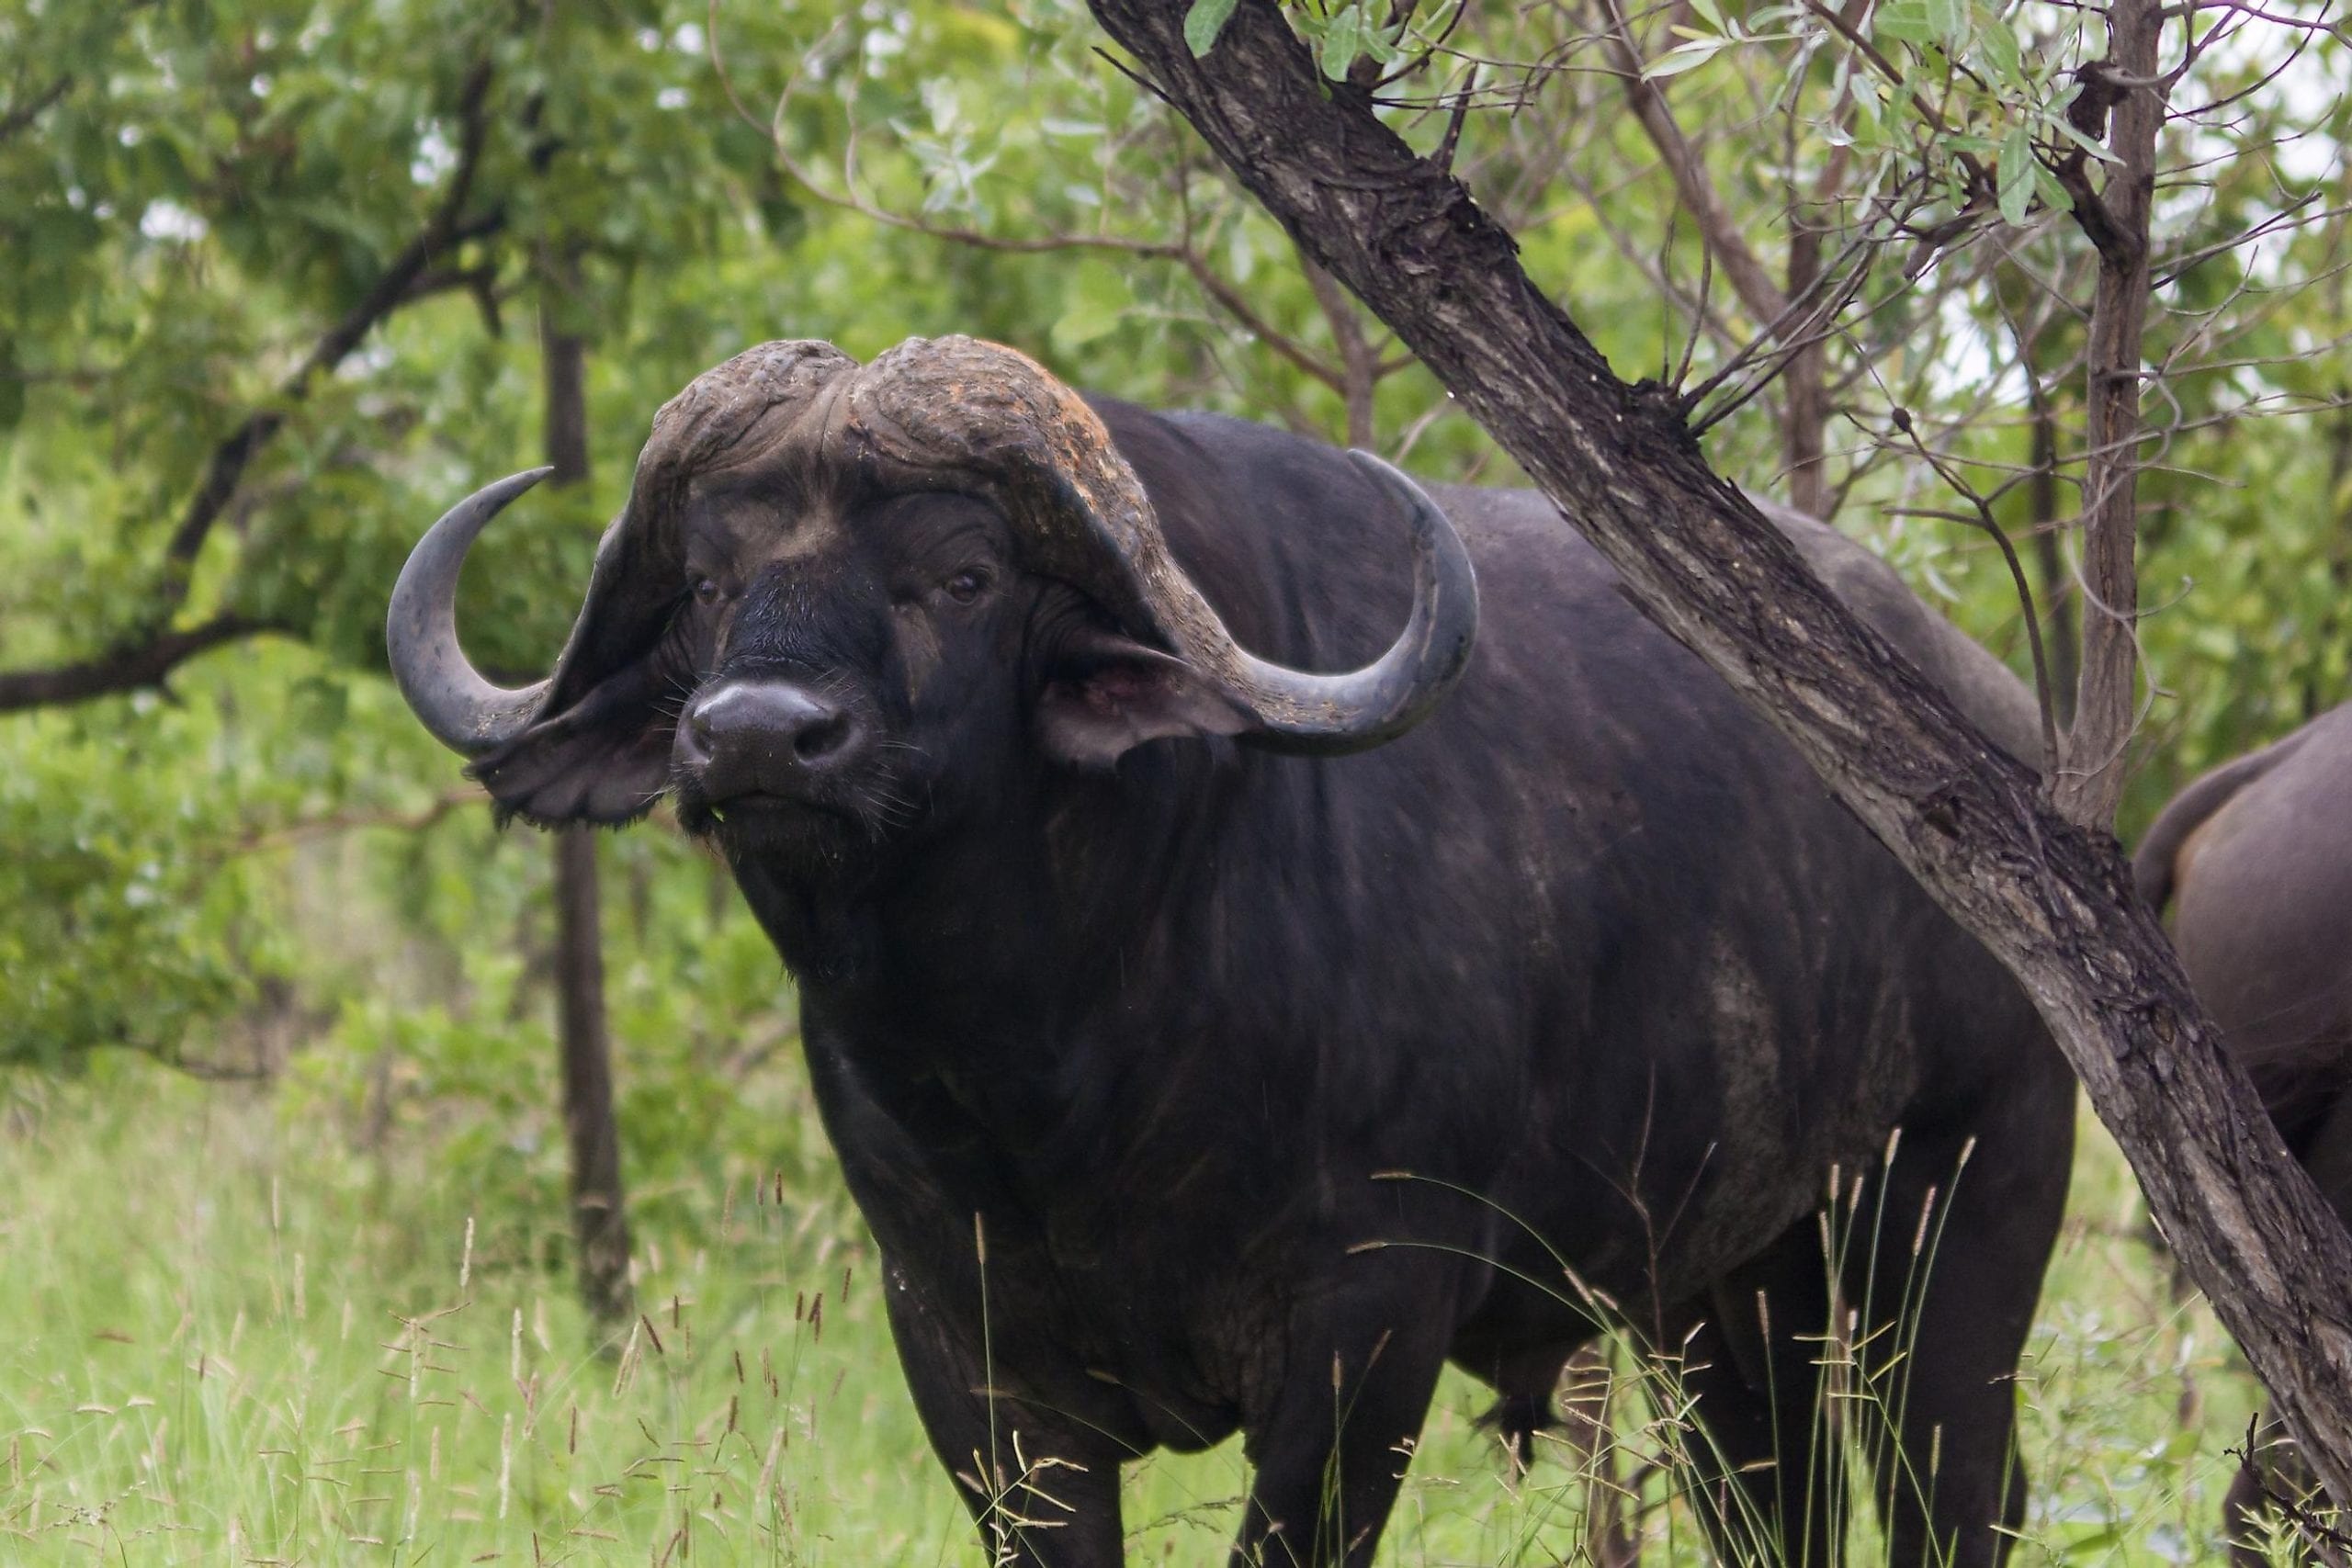 Cape buffalo with long horns and dark fur.